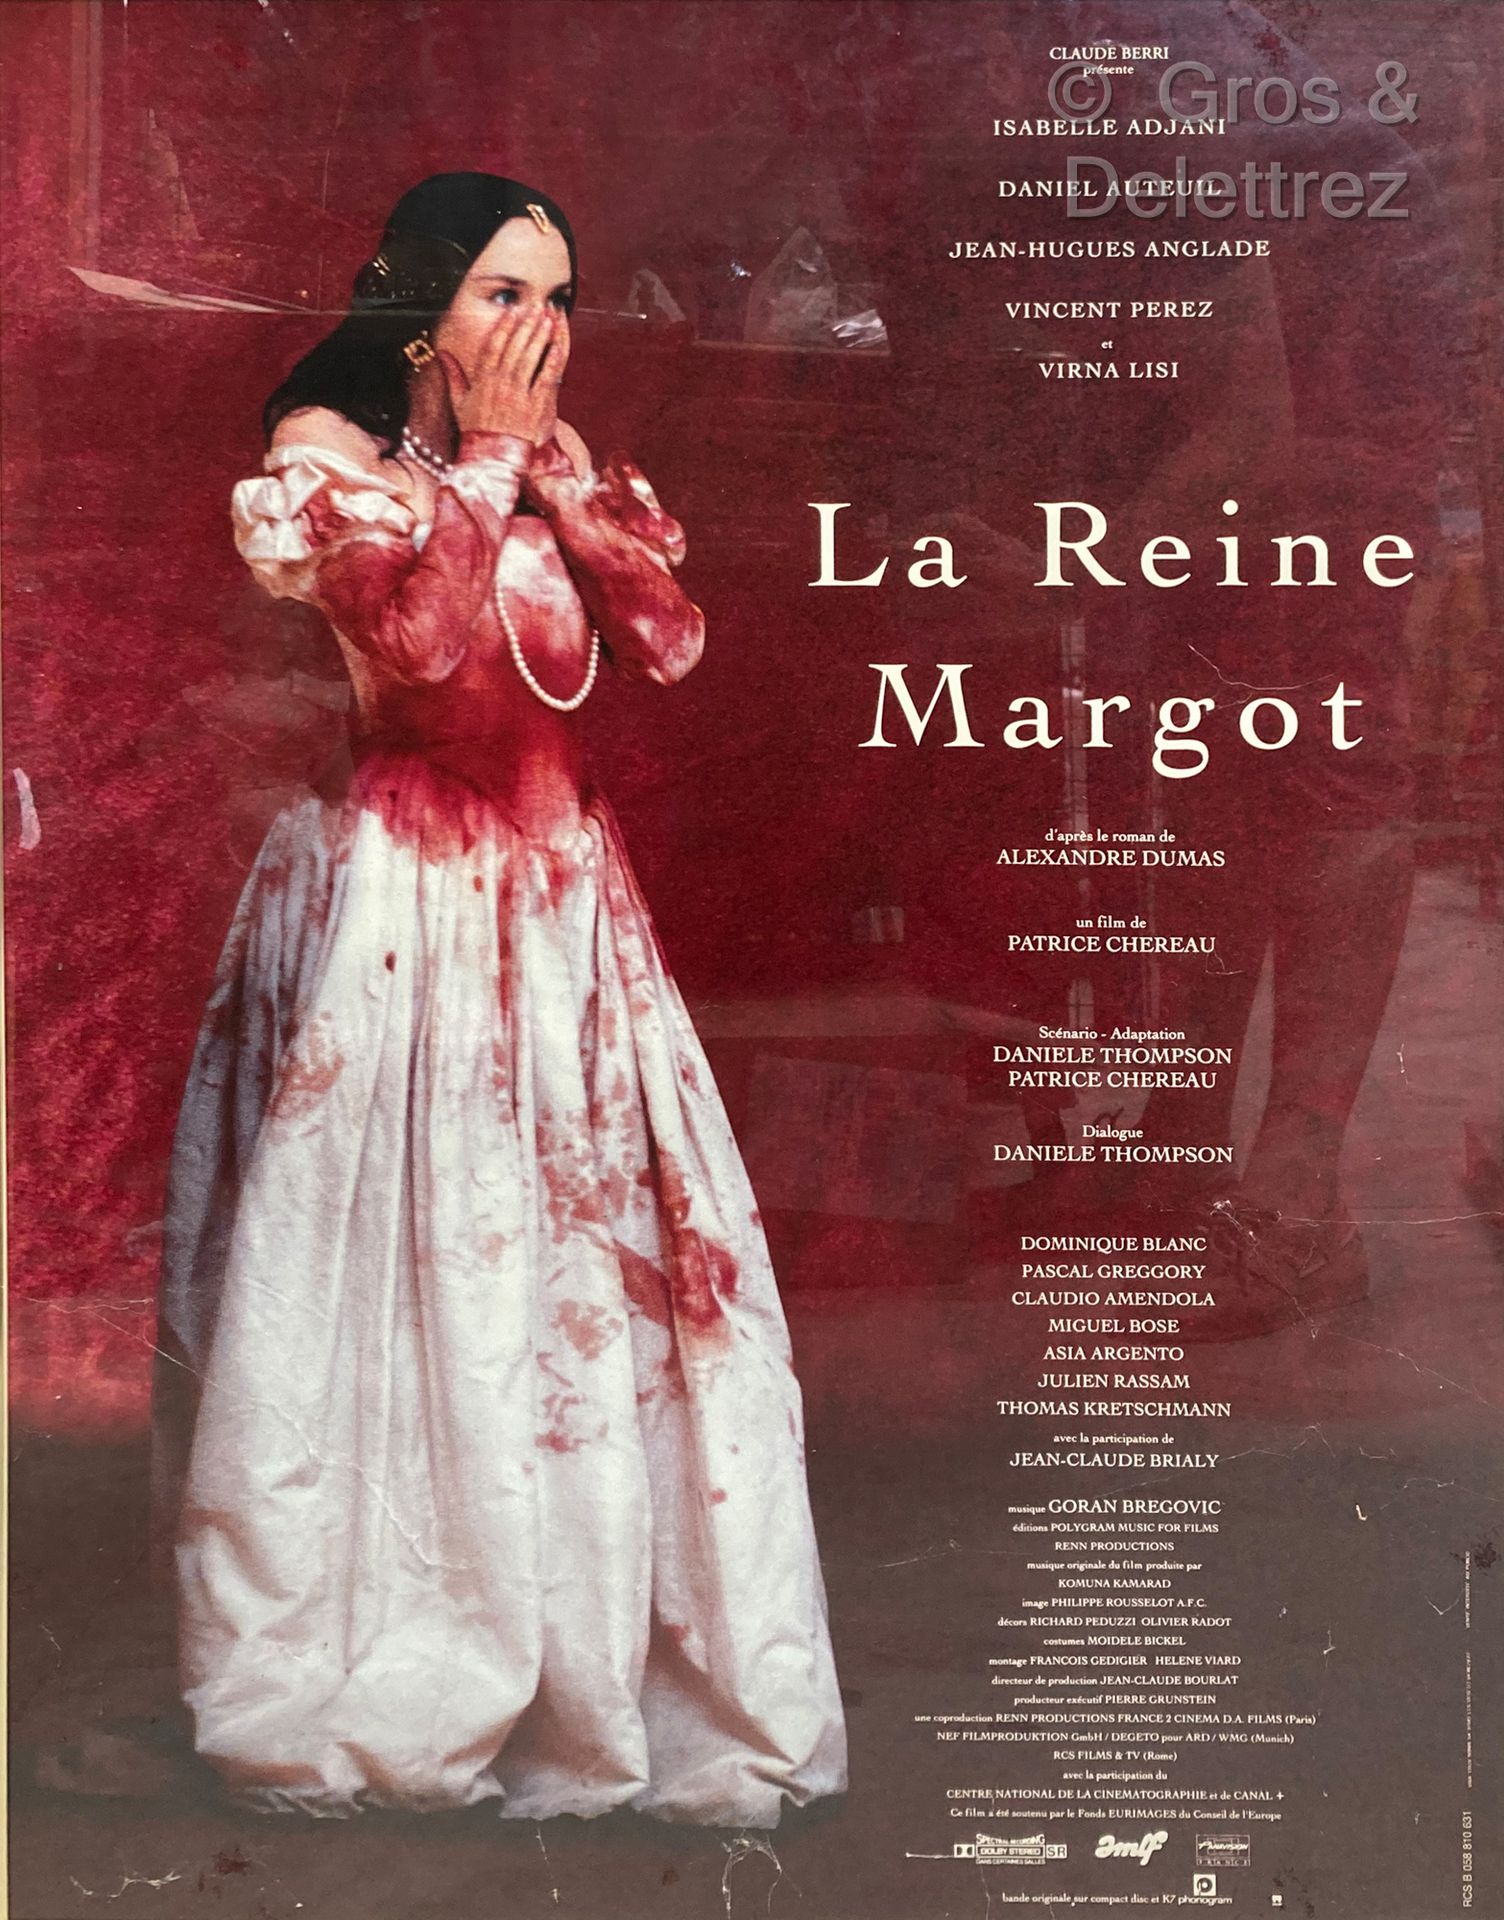 Patrice Chereau 玛格丽特王后

电影海报

79 x 59厘米，玻璃下